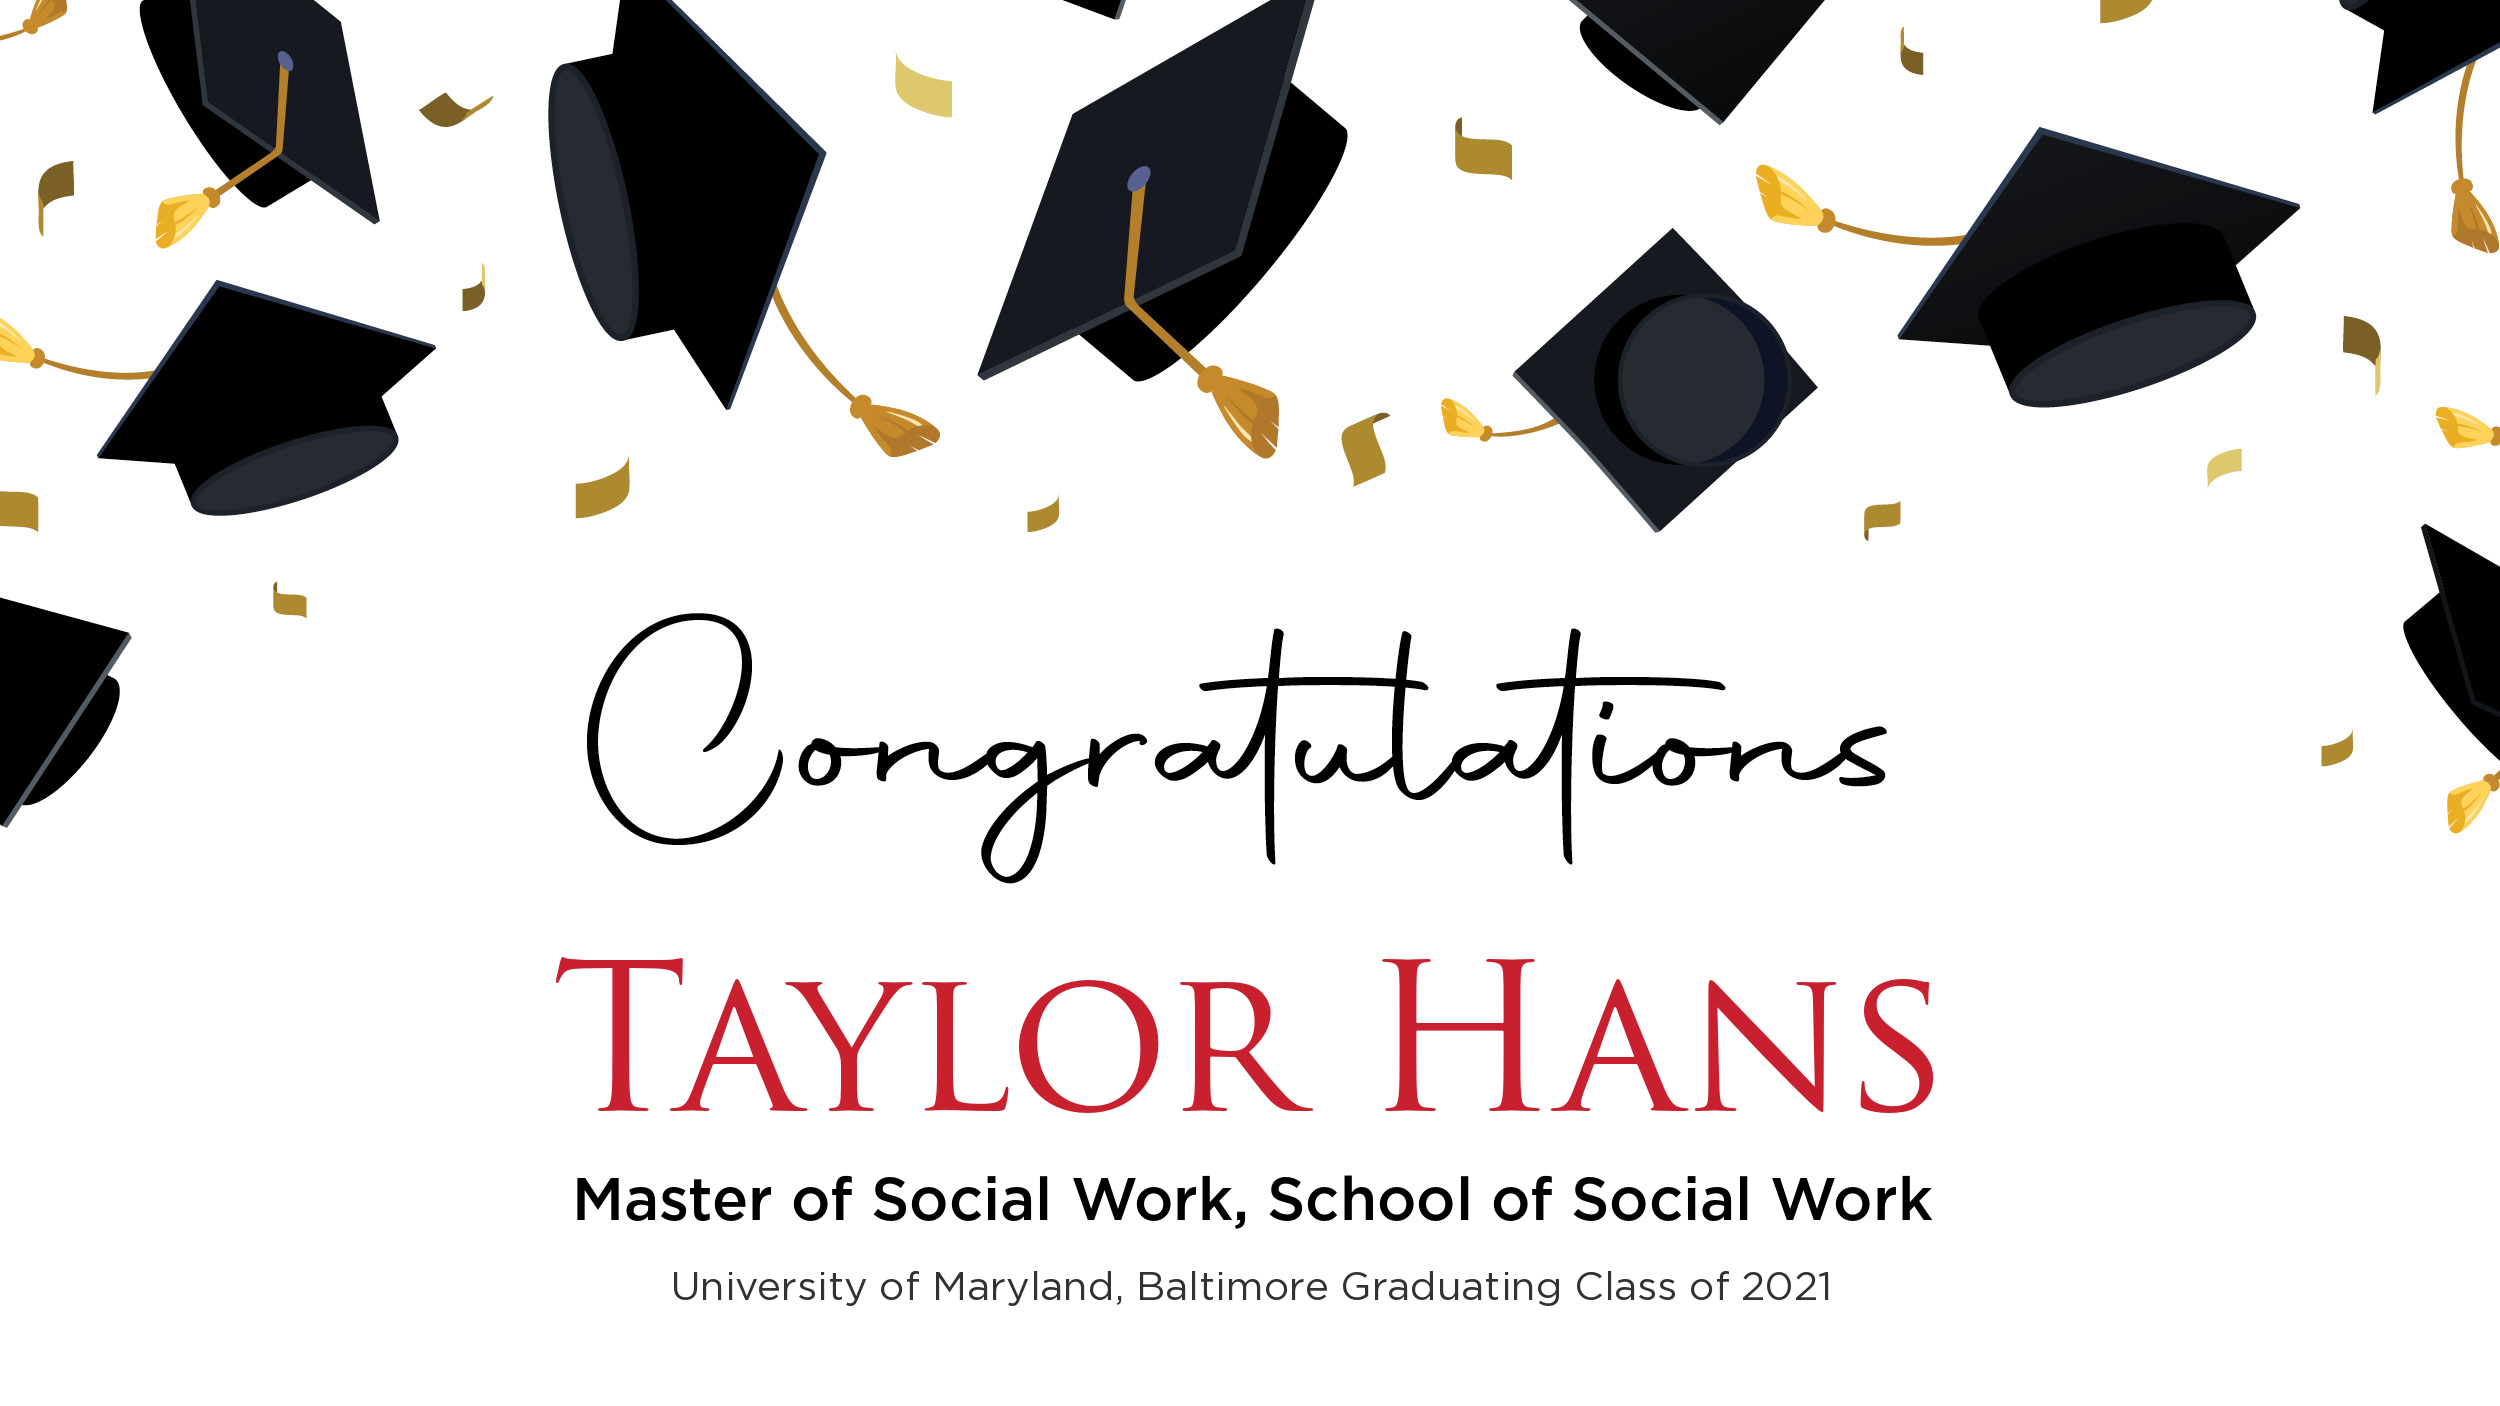 Congratulations Taylor Hans, Master of Social Work